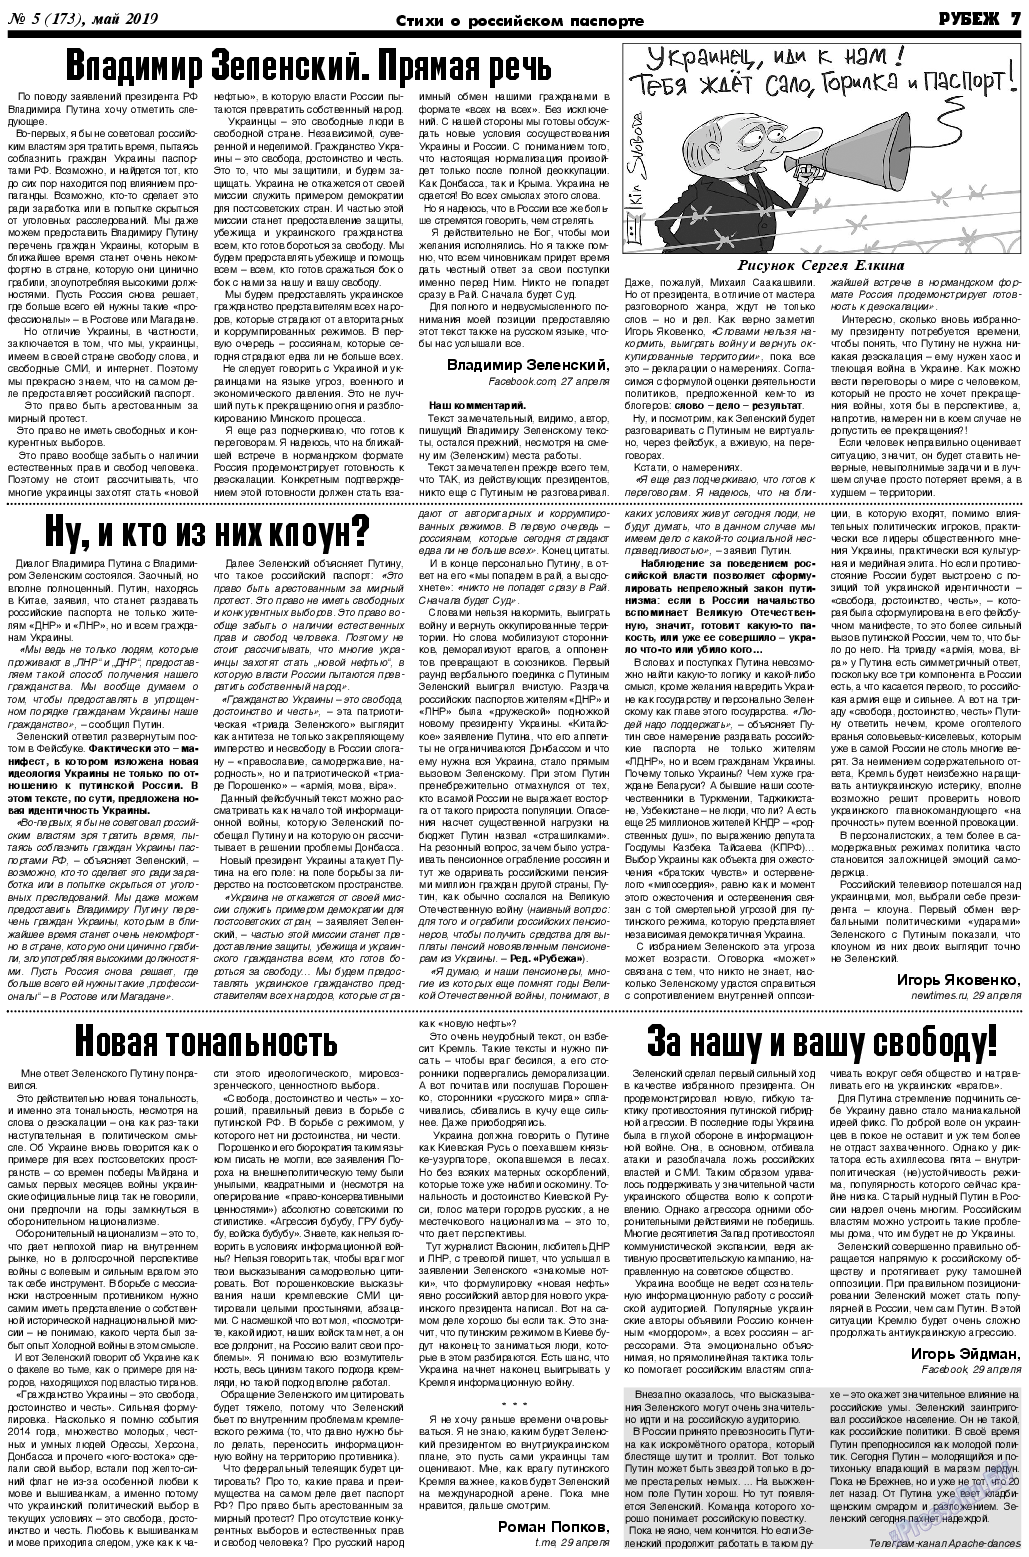 Рубеж, газета. 2019 №5 стр.7